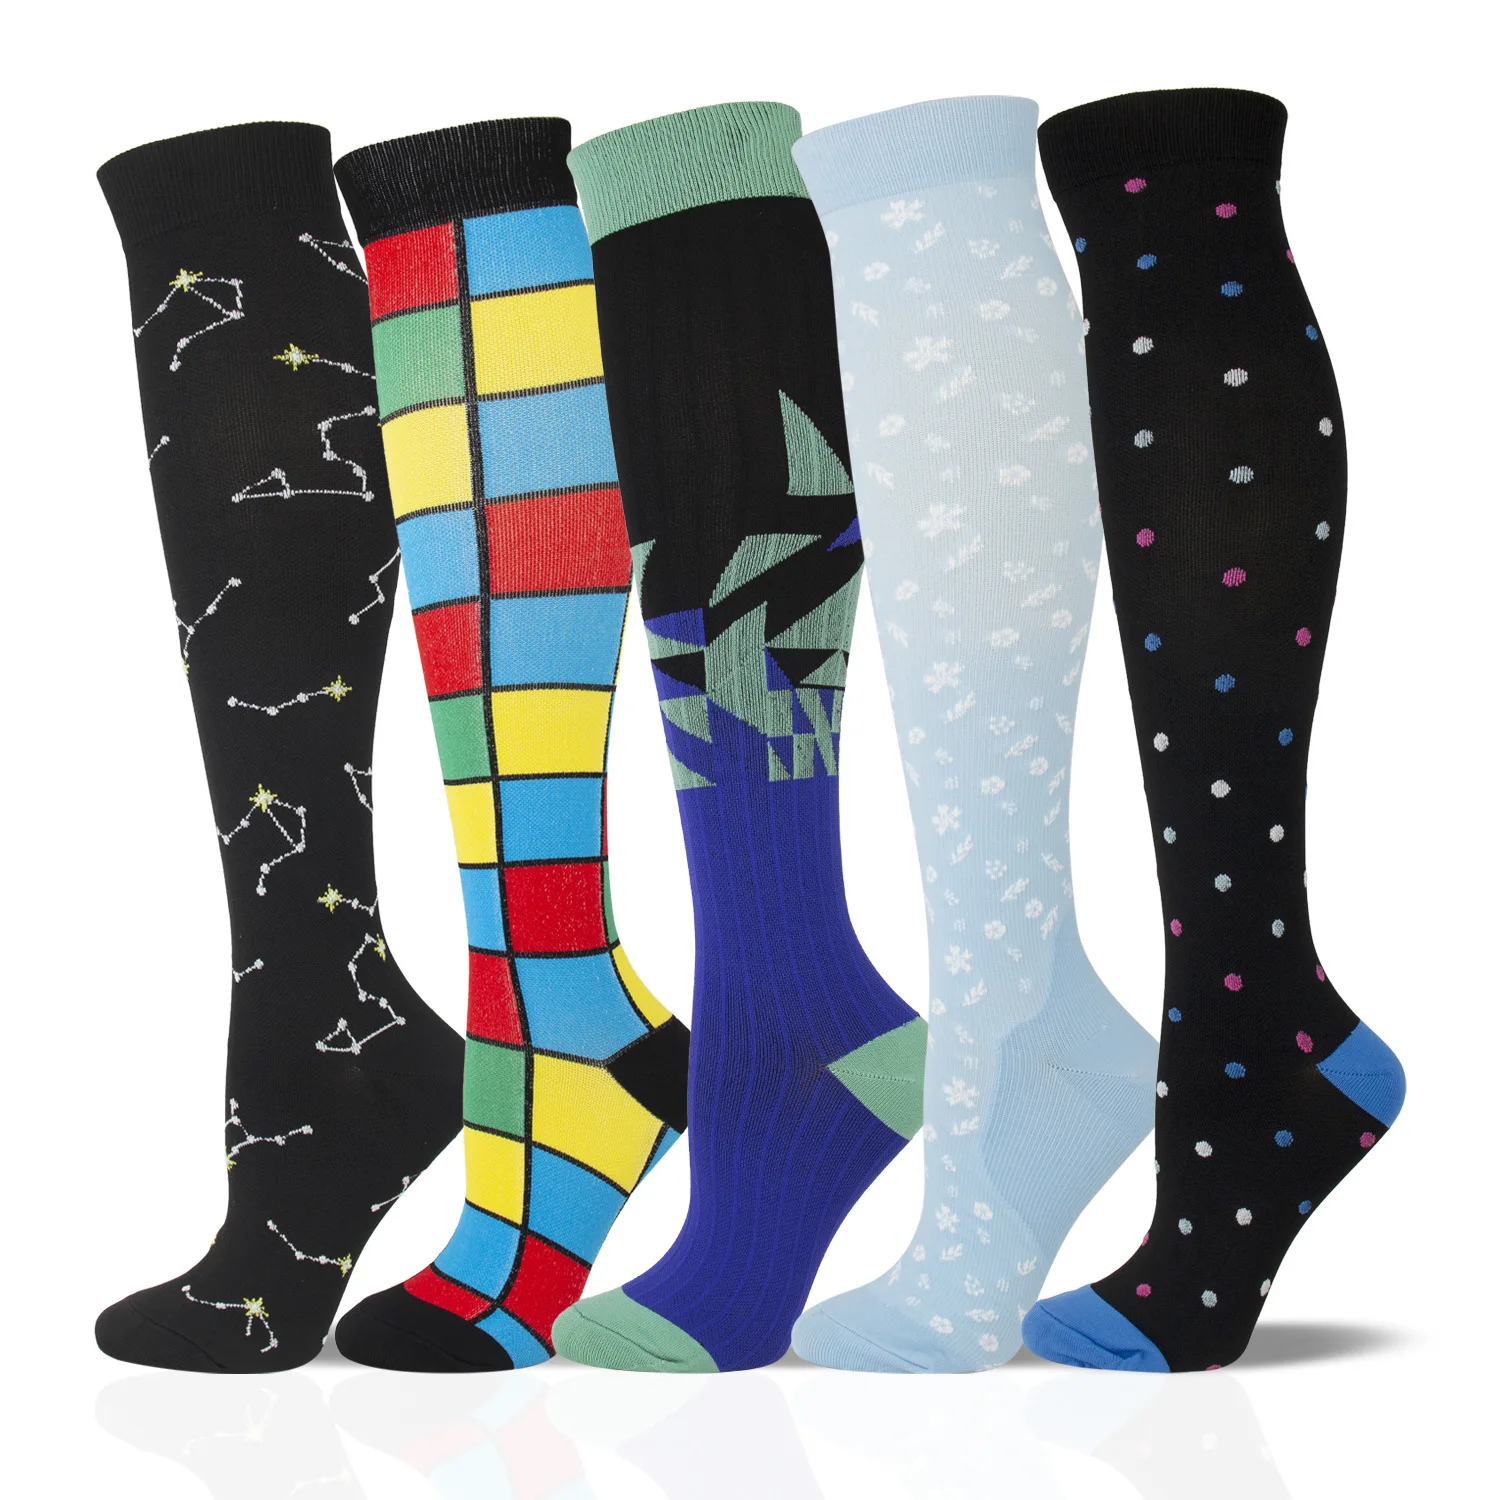 

2021 wholesale custom 20-30mmhg fashion nurse football medical knee high running cycling sport stockings compression socks men, Multi color